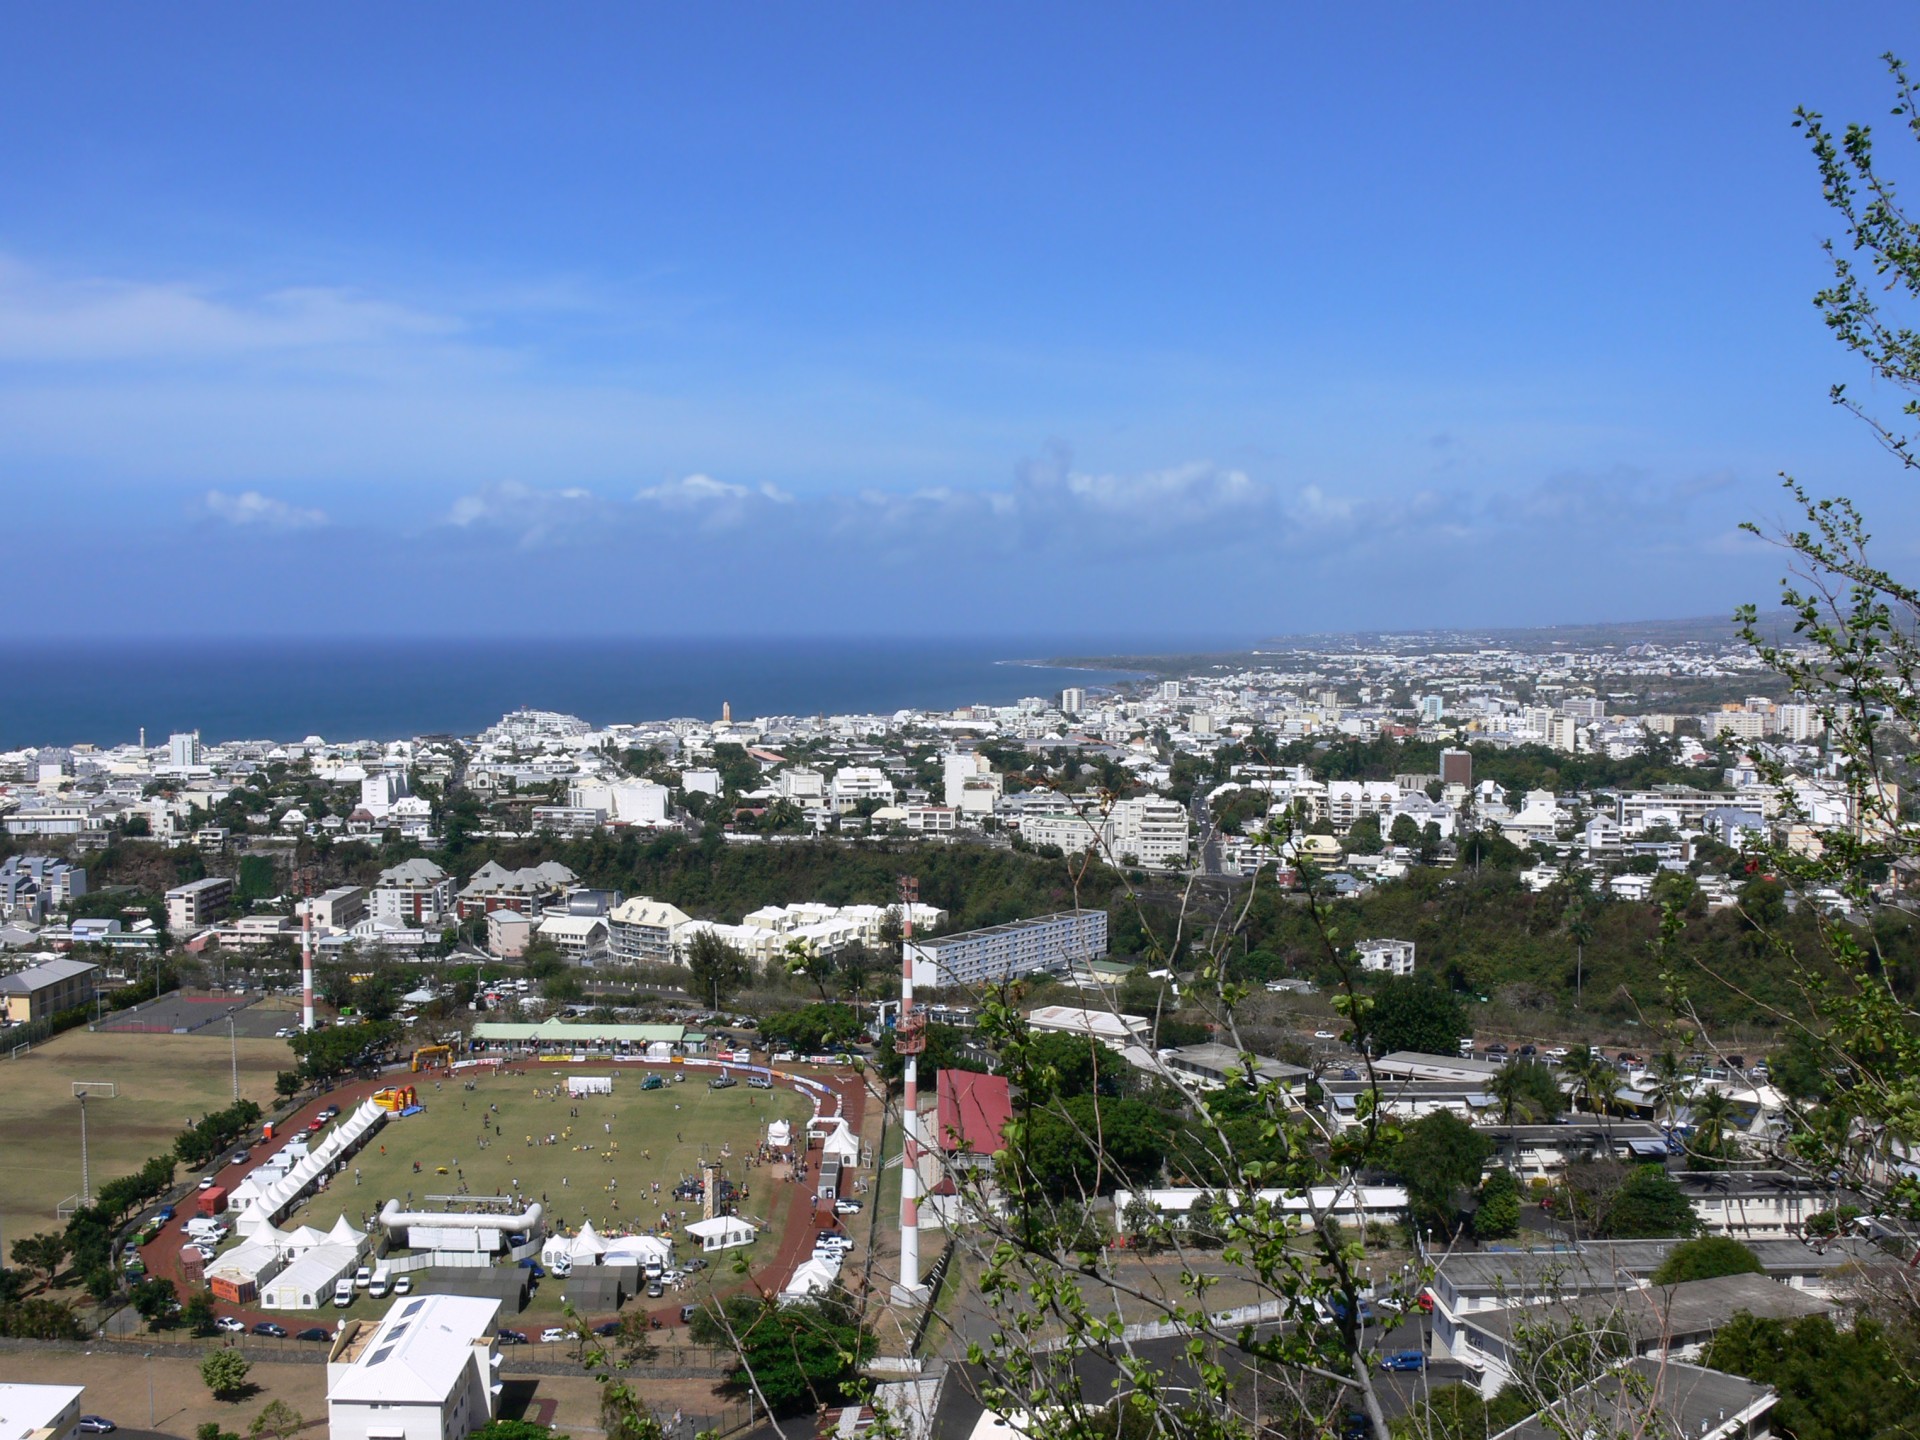 Saint Denis, the main town on Reunion Island